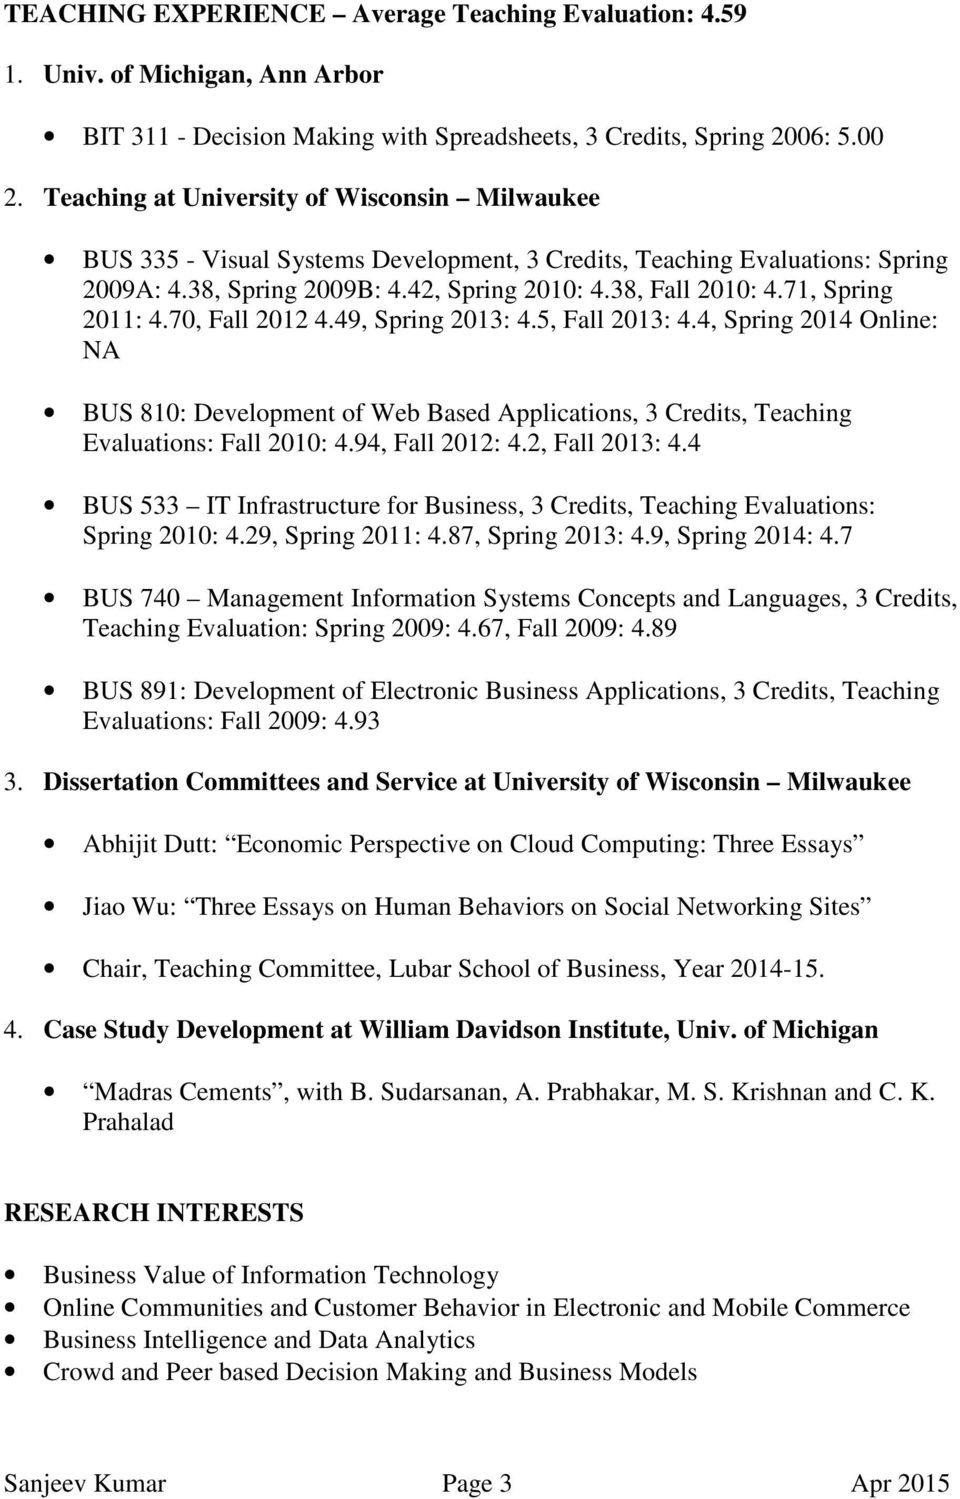 university of michigan supplemental essays 2019-2020